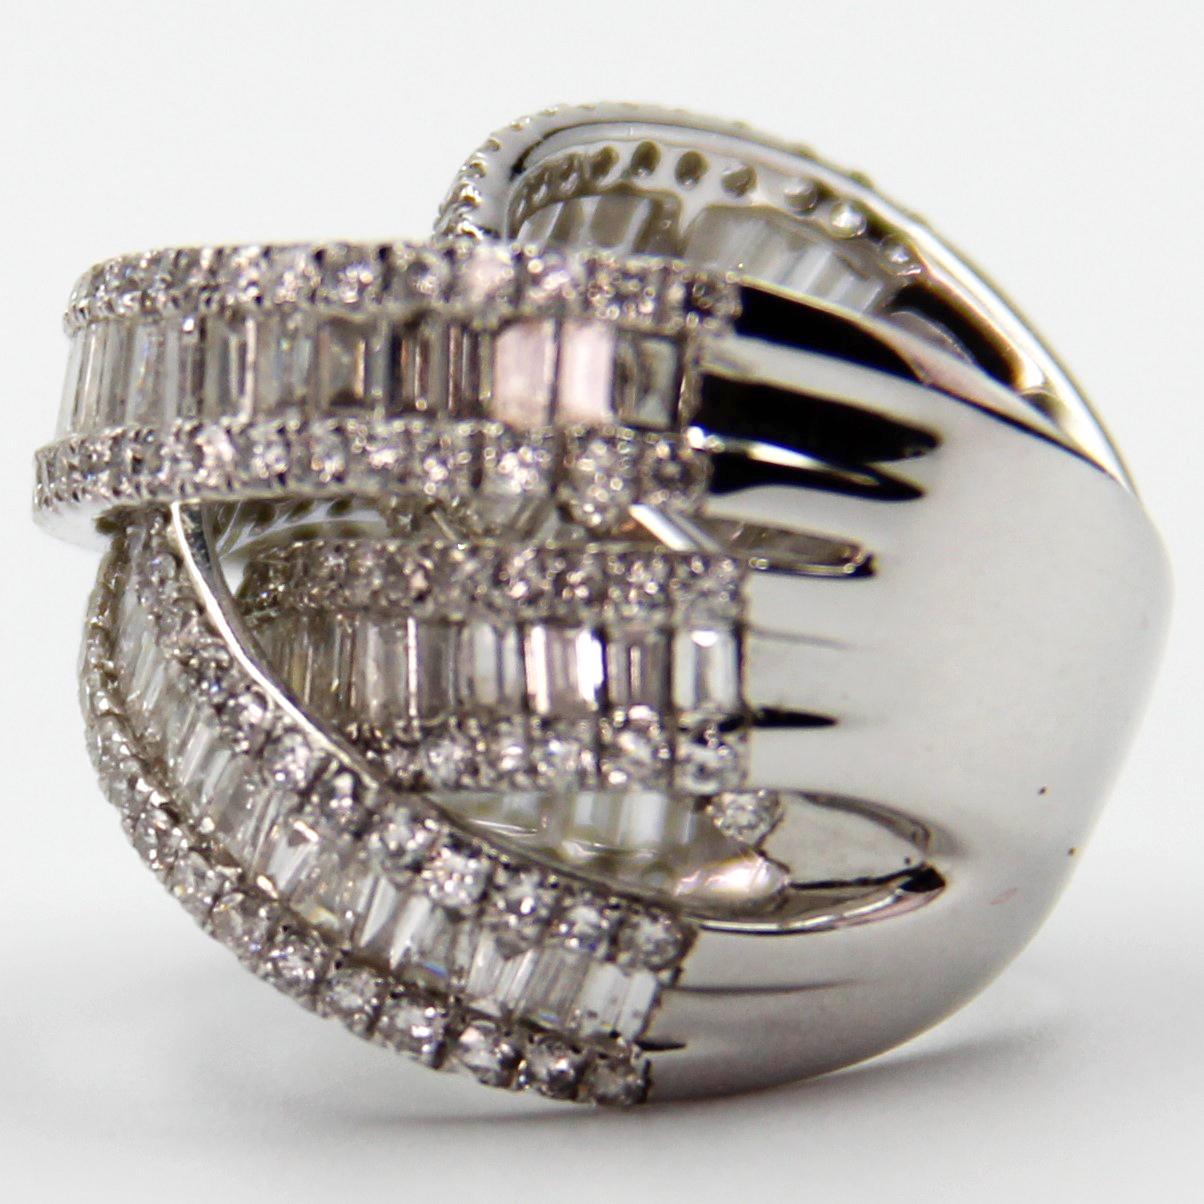 IGSL Certified 5.26 Carat Diamond Spiral Ring For Sale 1